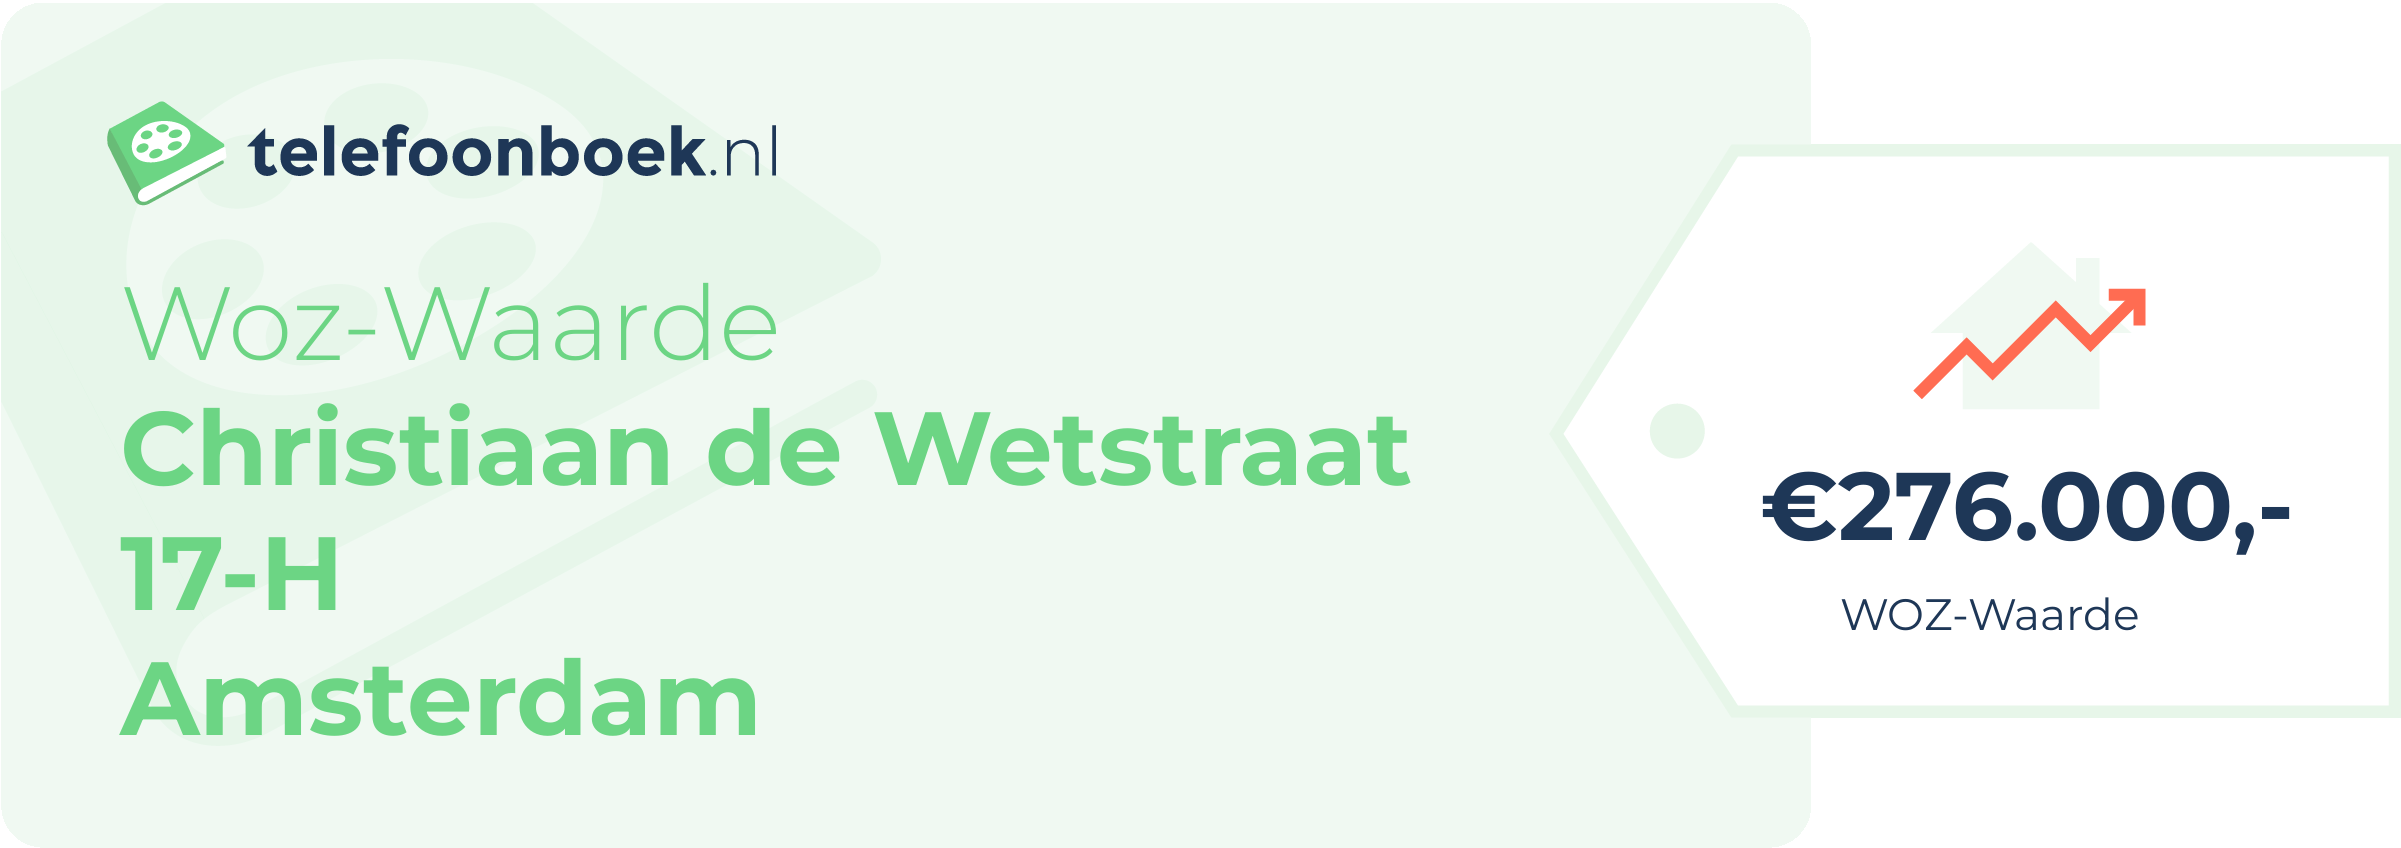 WOZ-waarde Christiaan De Wetstraat 17-H Amsterdam